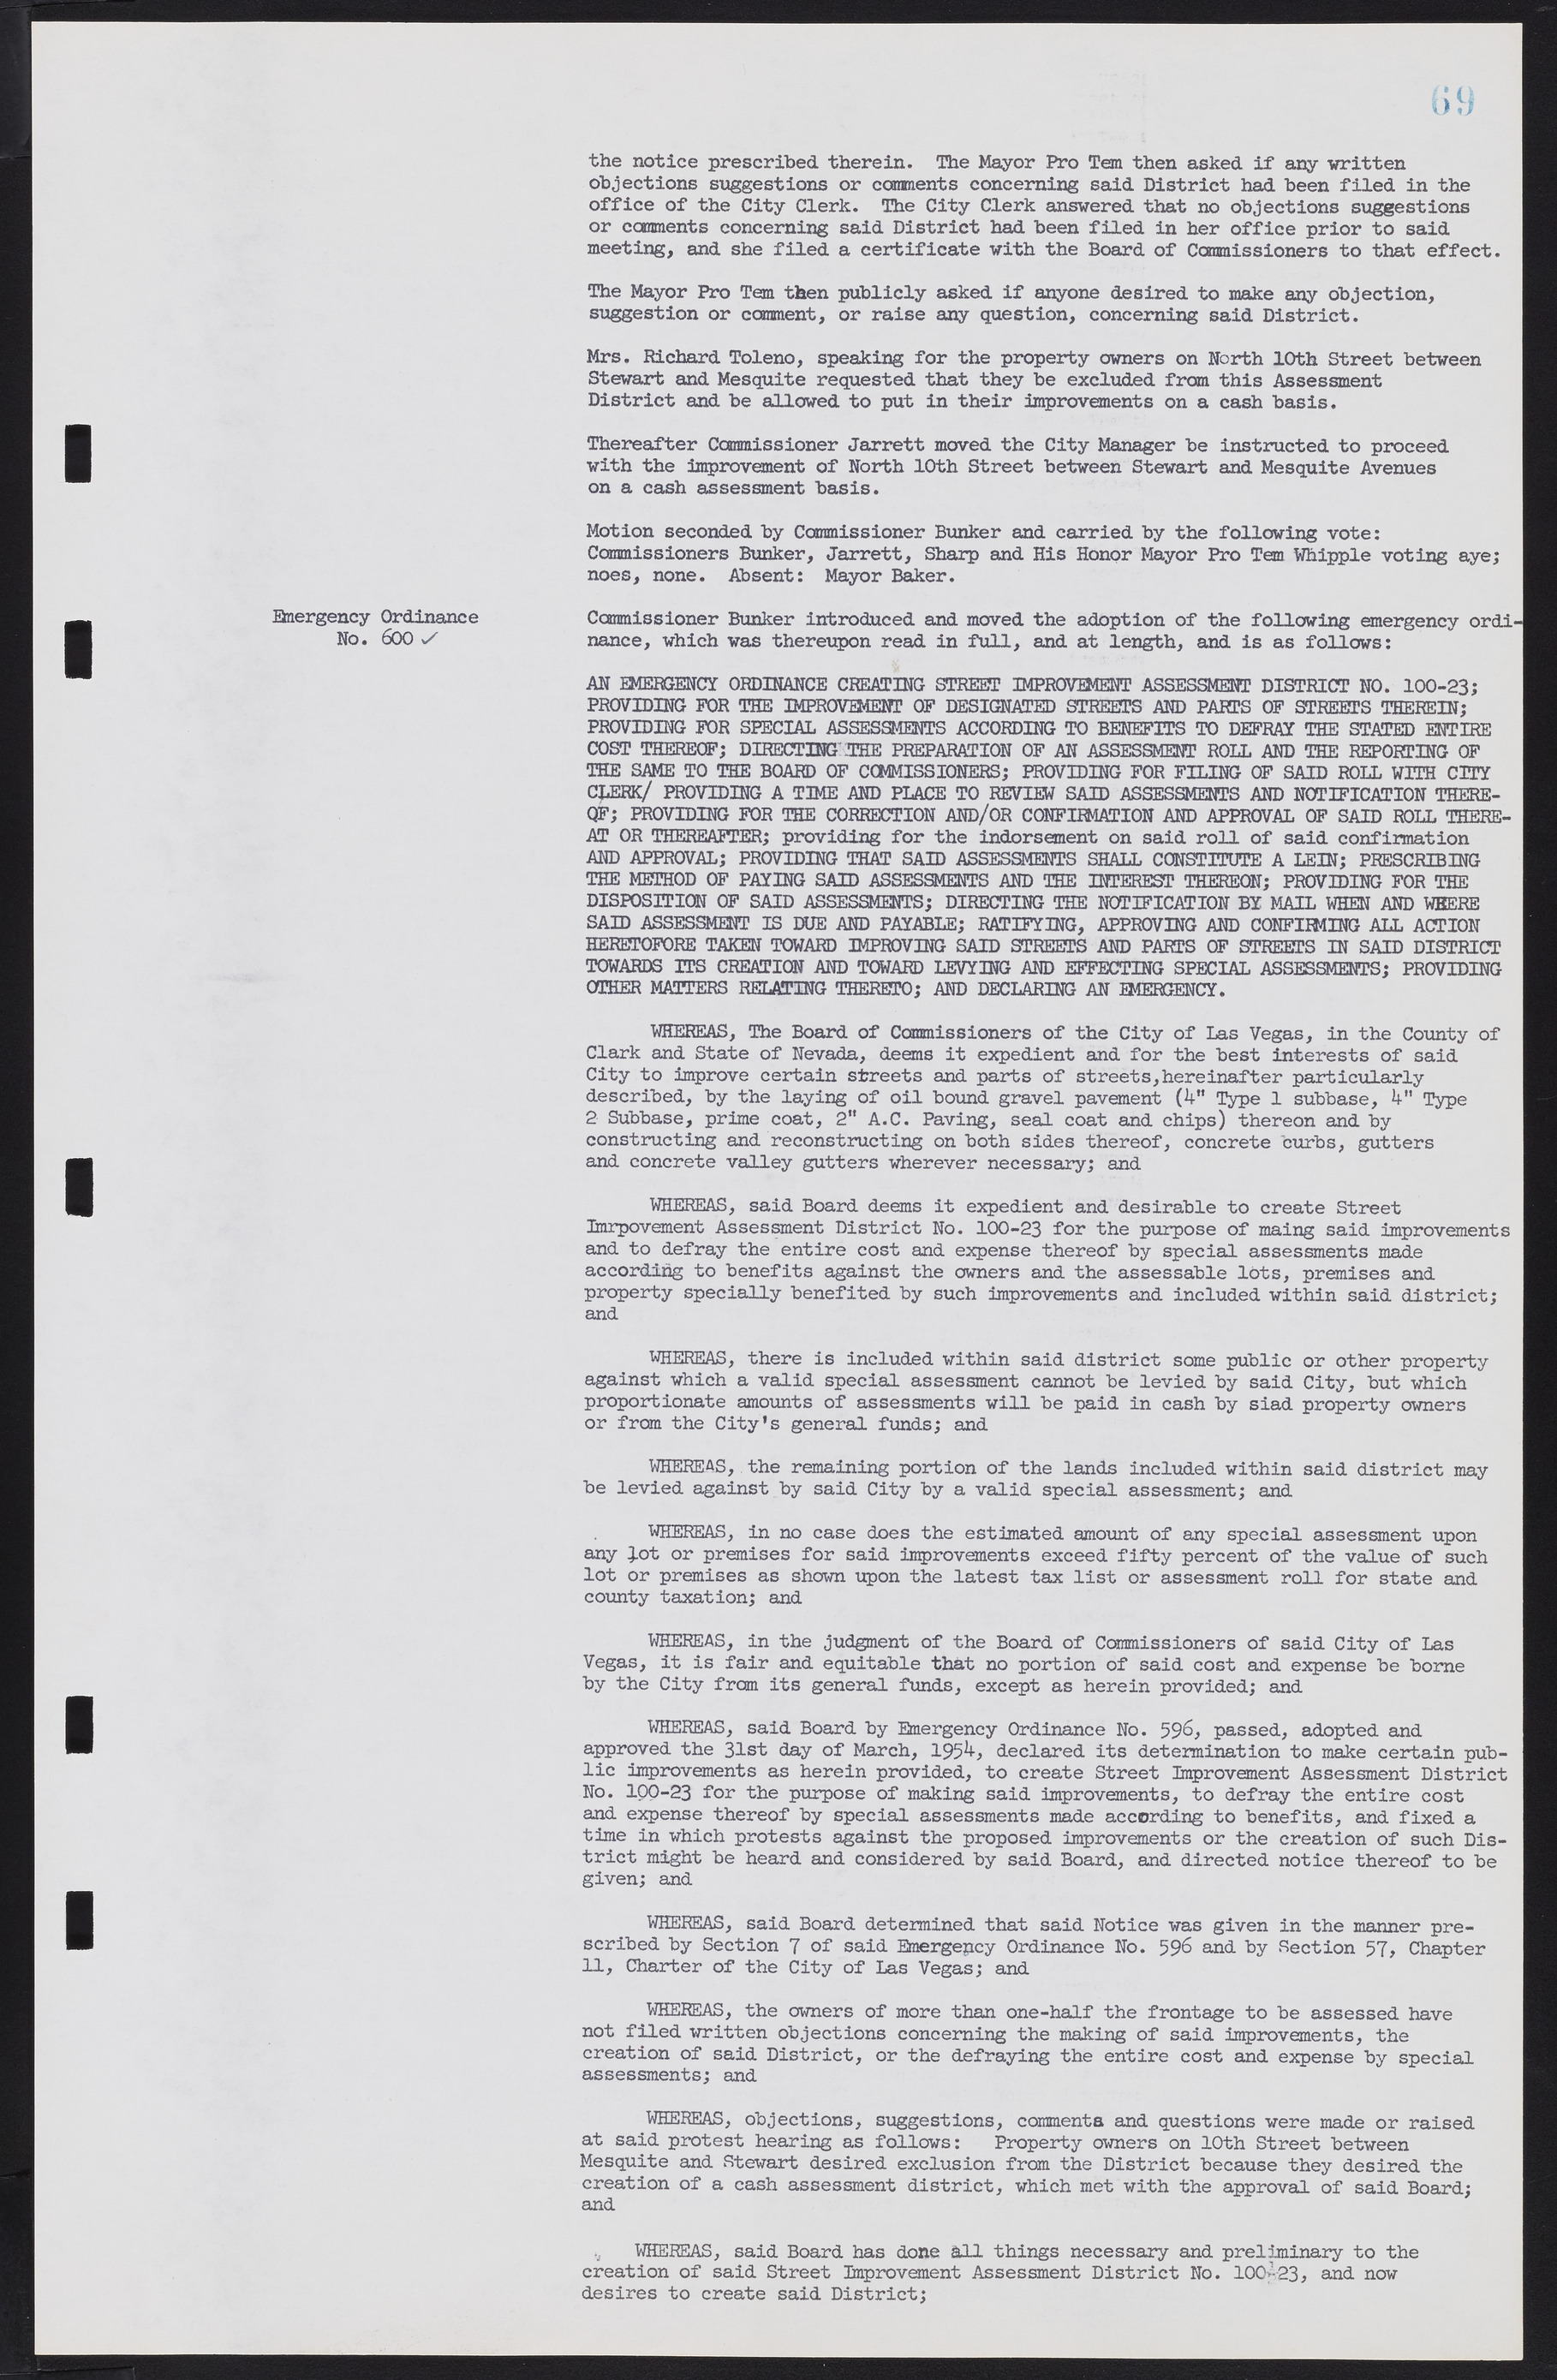 Las Vegas City Commission Minutes, February 17, 1954 to September 21, 1955, lvc000009-73